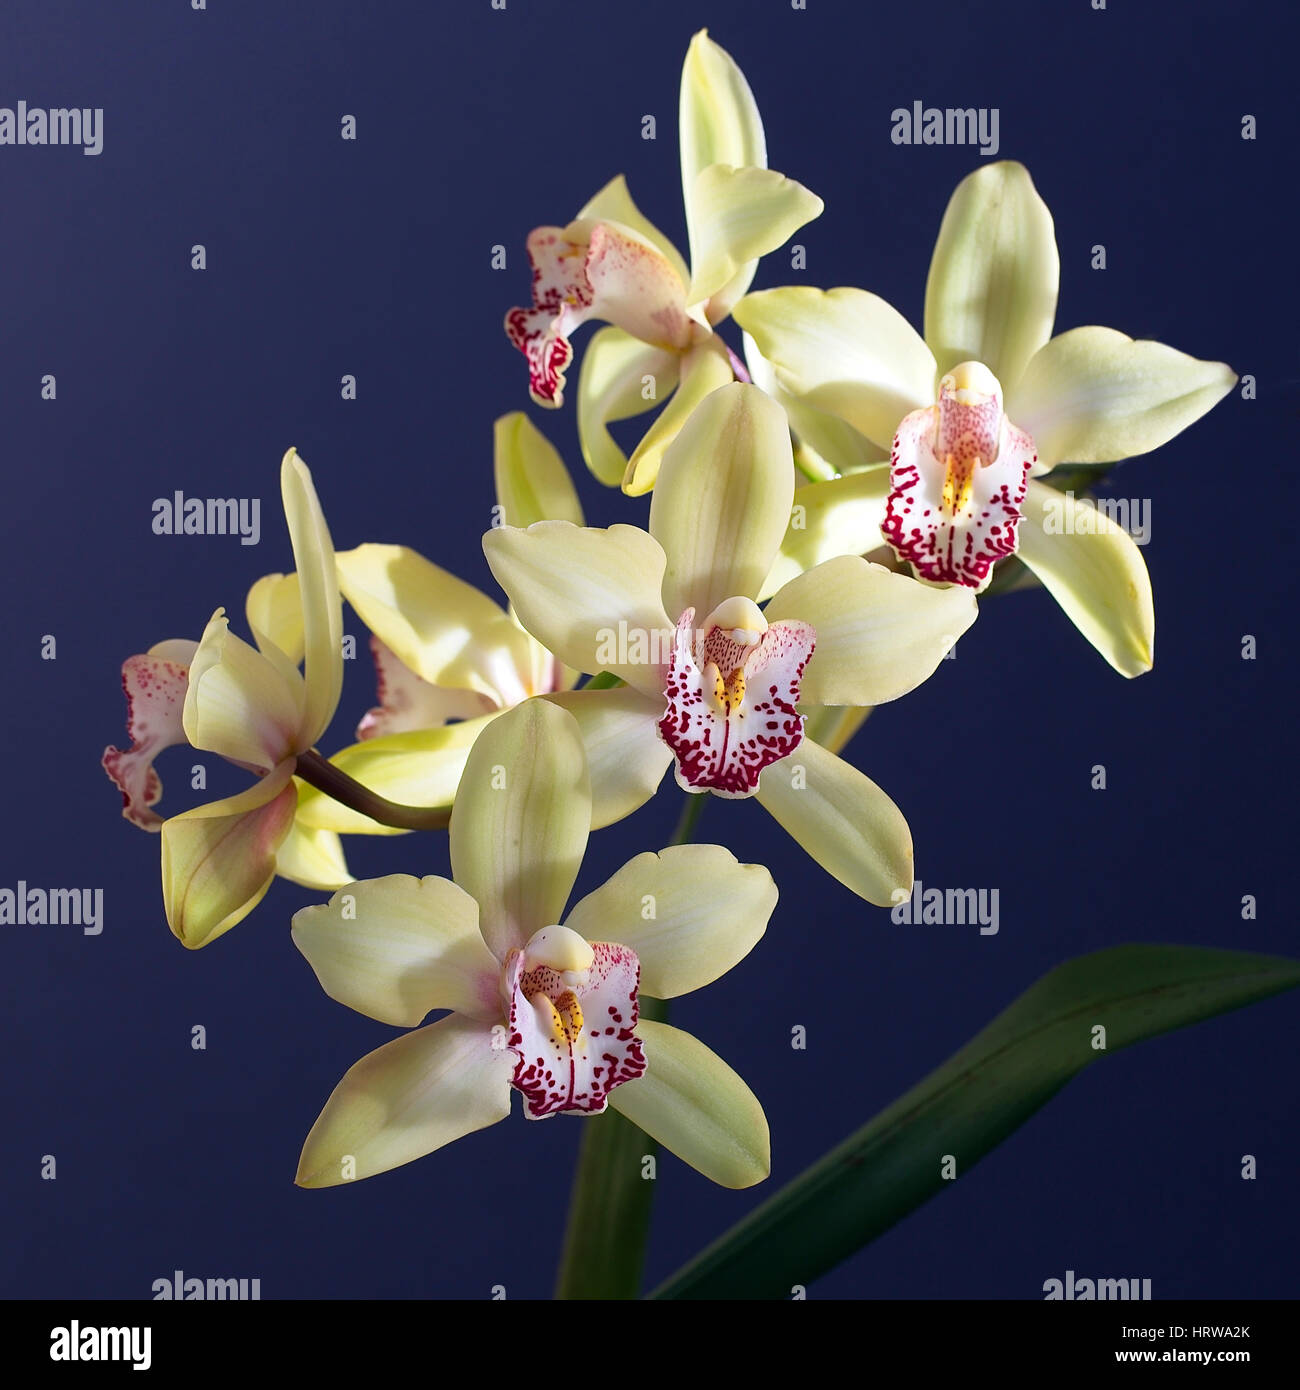 Cymbidium or Boat orchid flowers, Cornwall, England, UK. Stock Photo